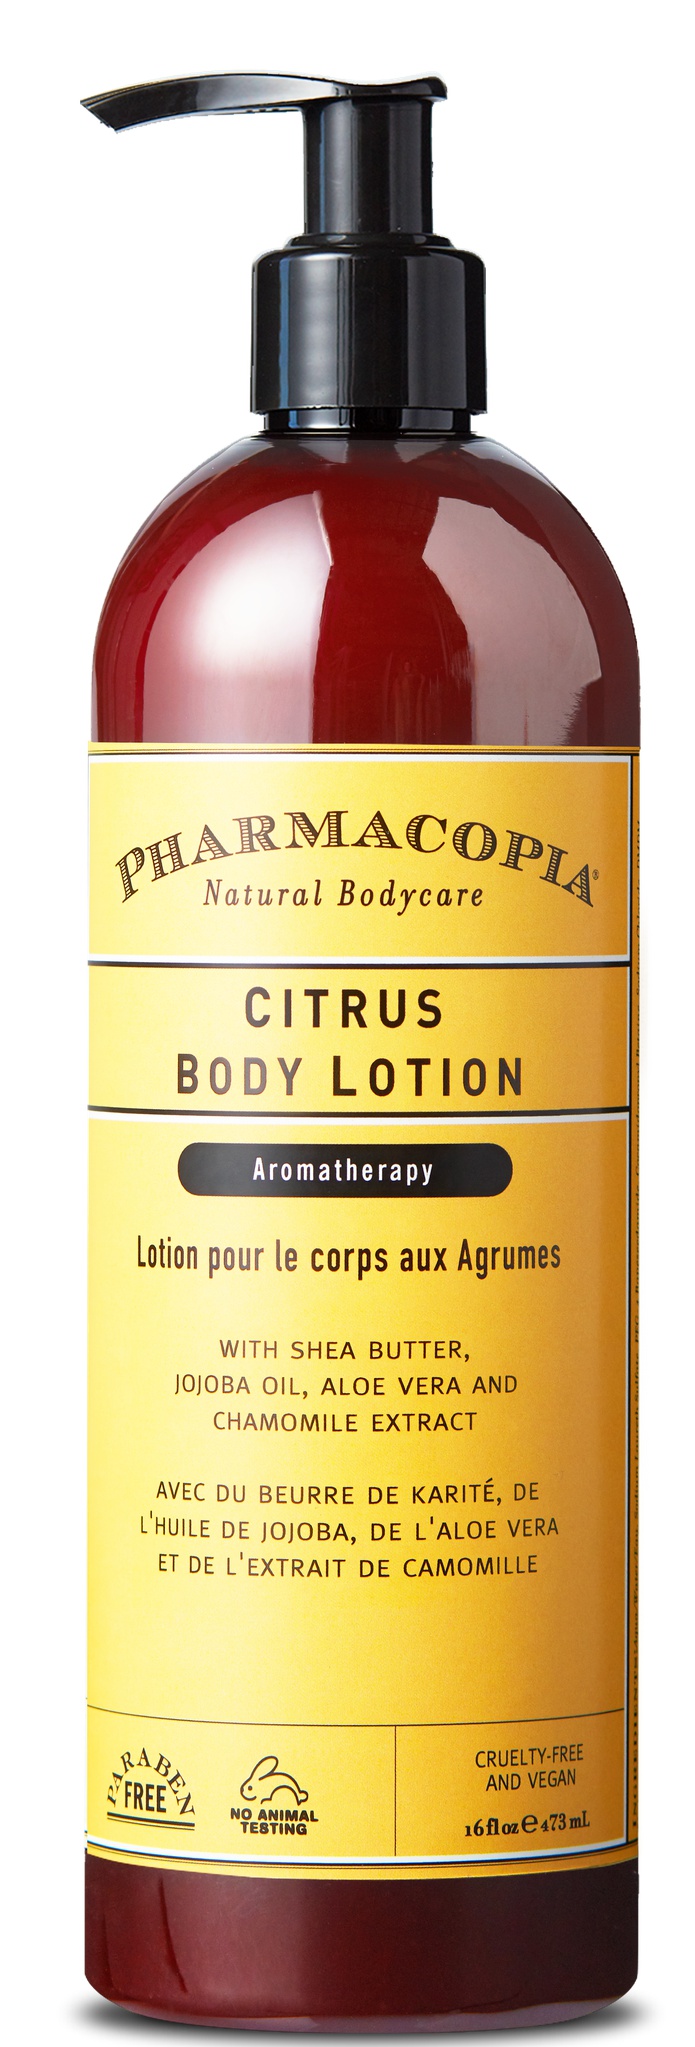 Pharmacopia Citrus Body Lotion